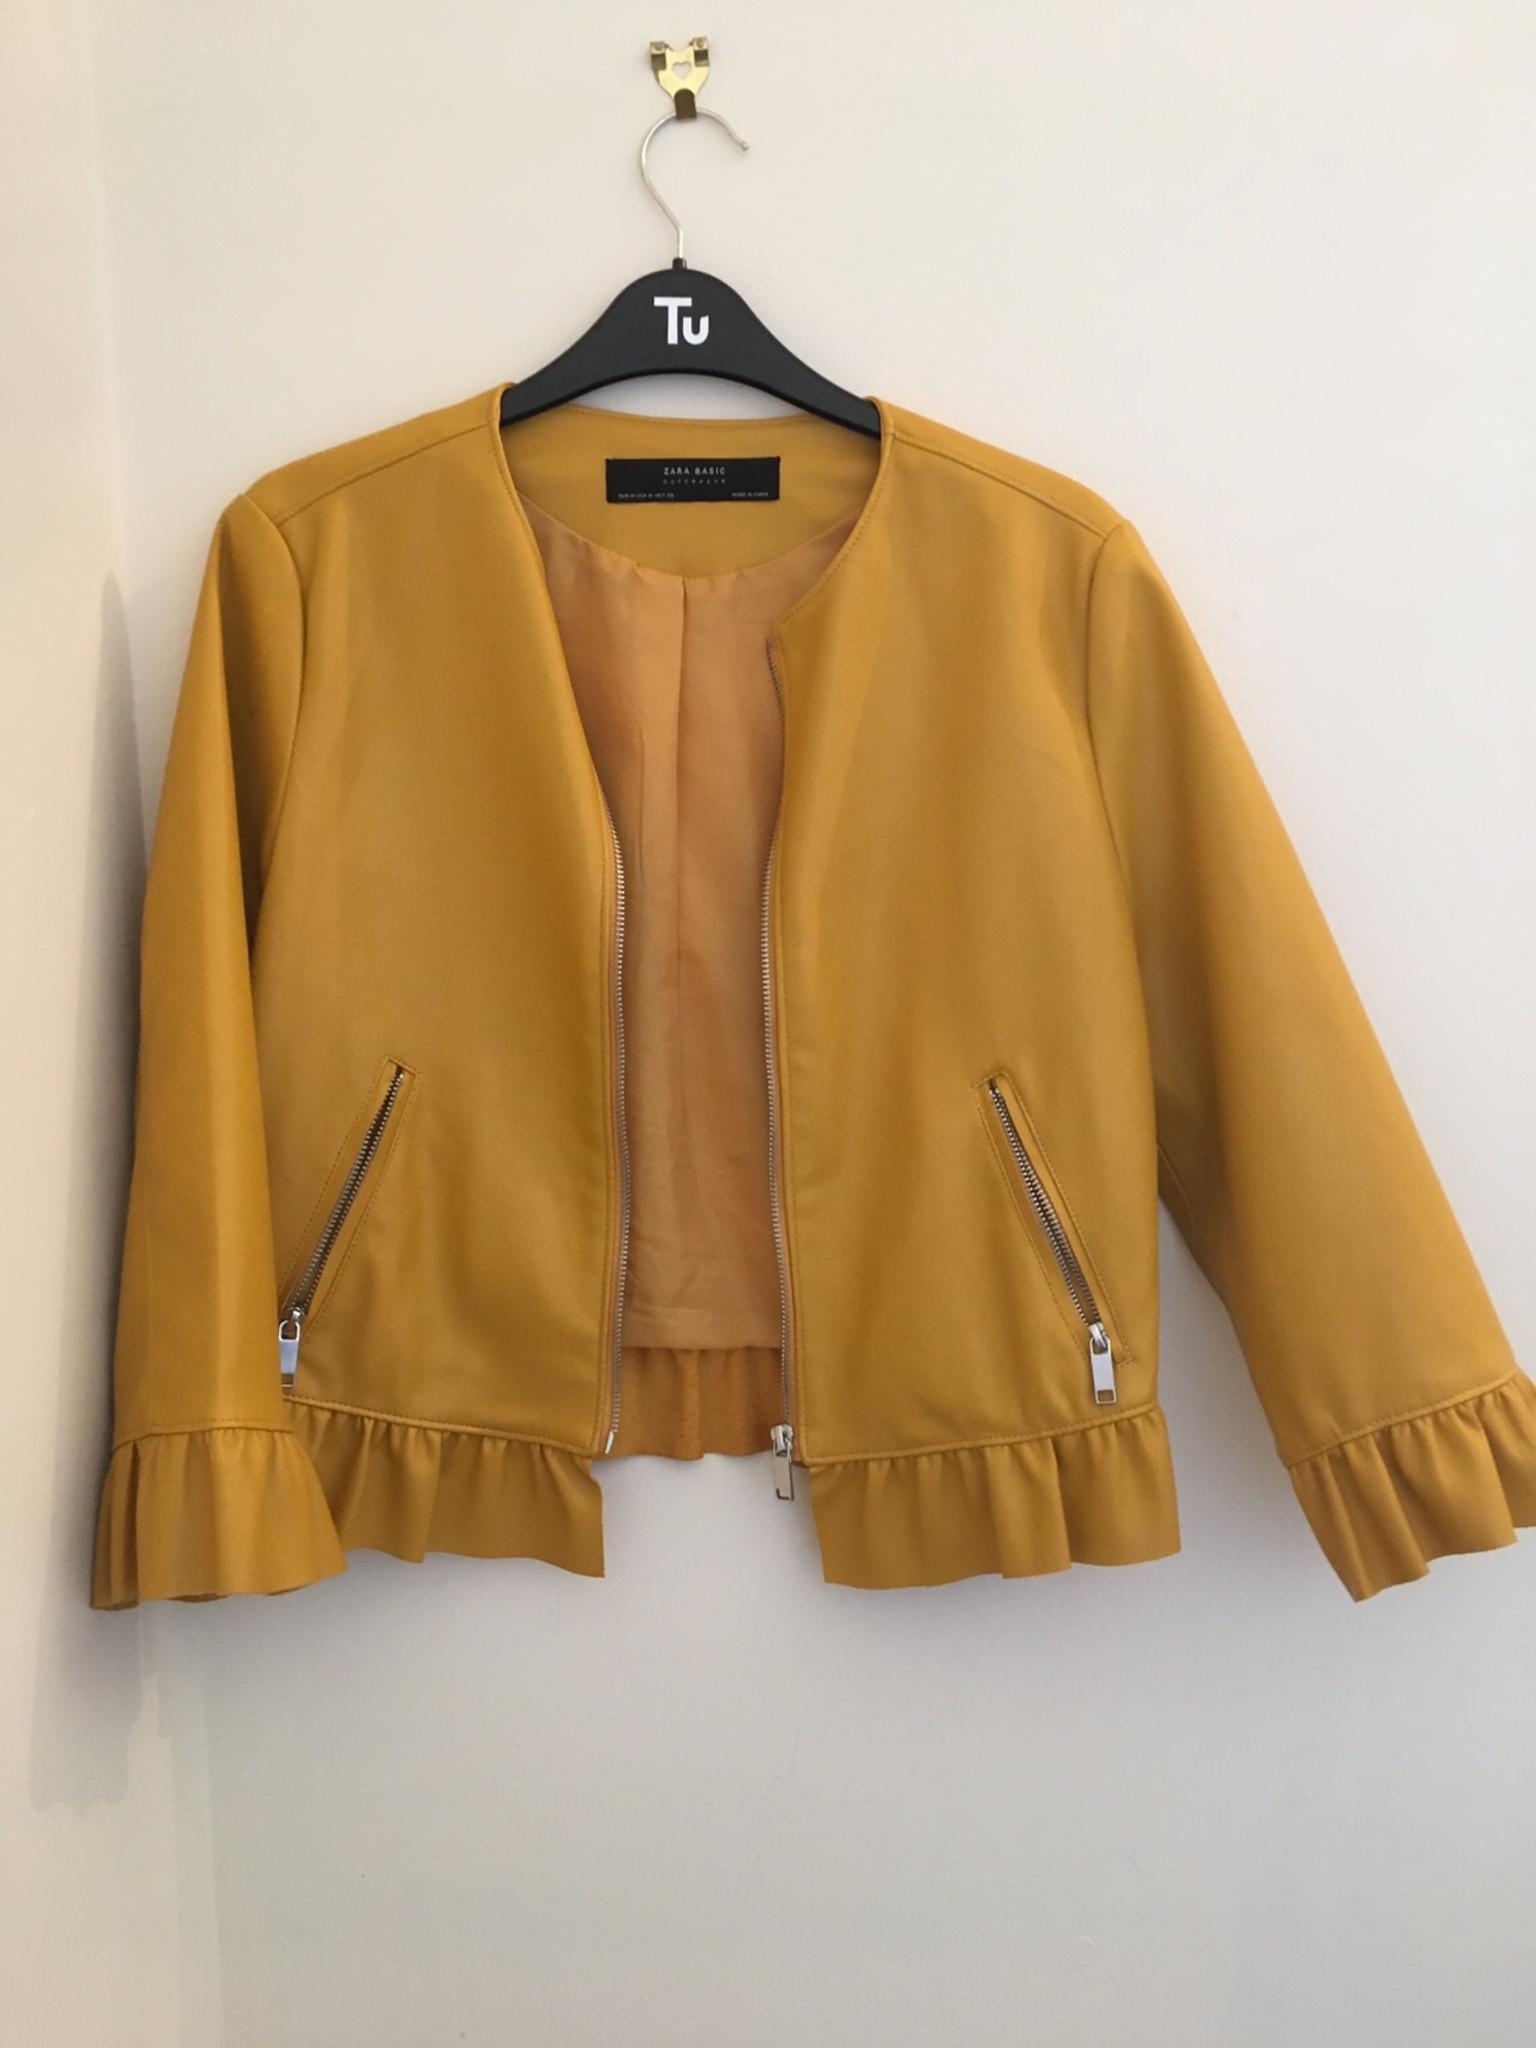 zara yellow jacket